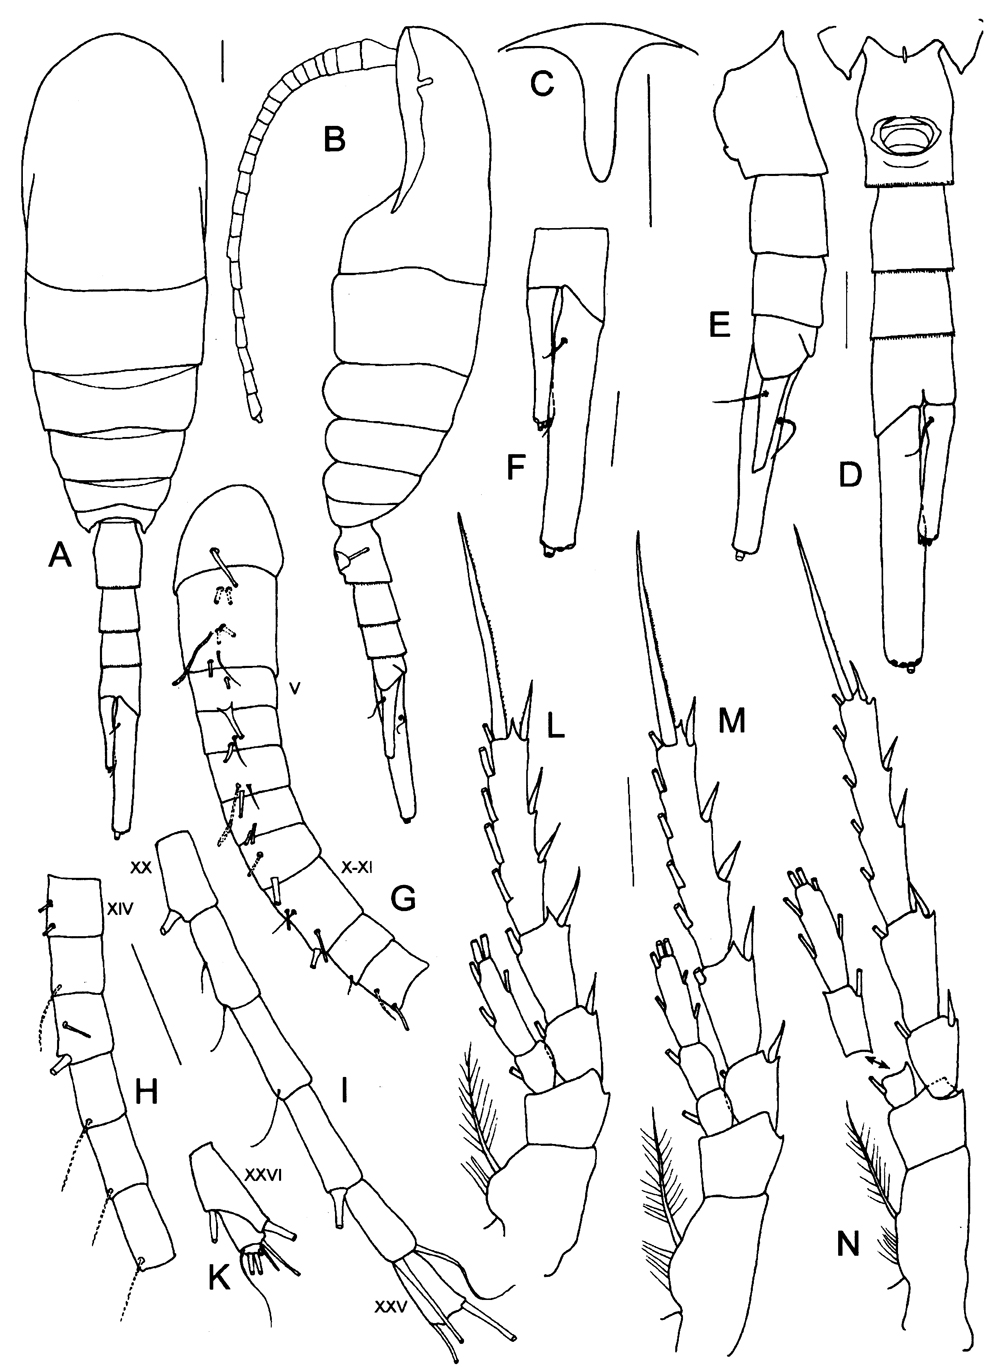 Species Caudacalanus vicinus - Plate 1 of morphological figures